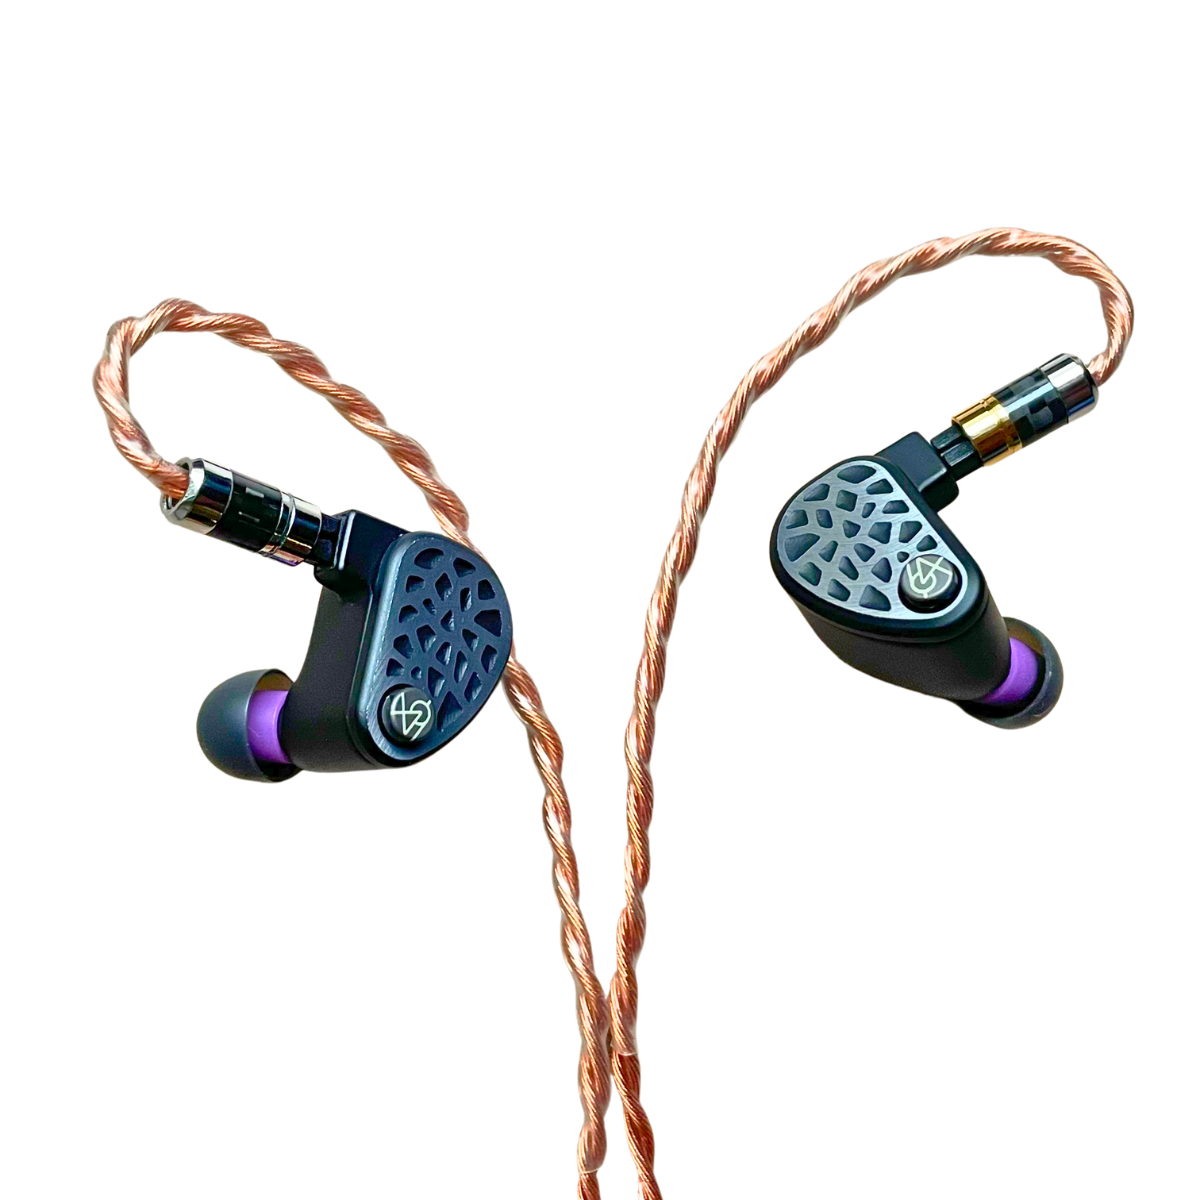 EarAudio ARC-CU Pure Copper Upgrade Cable For In-Ear Monitors